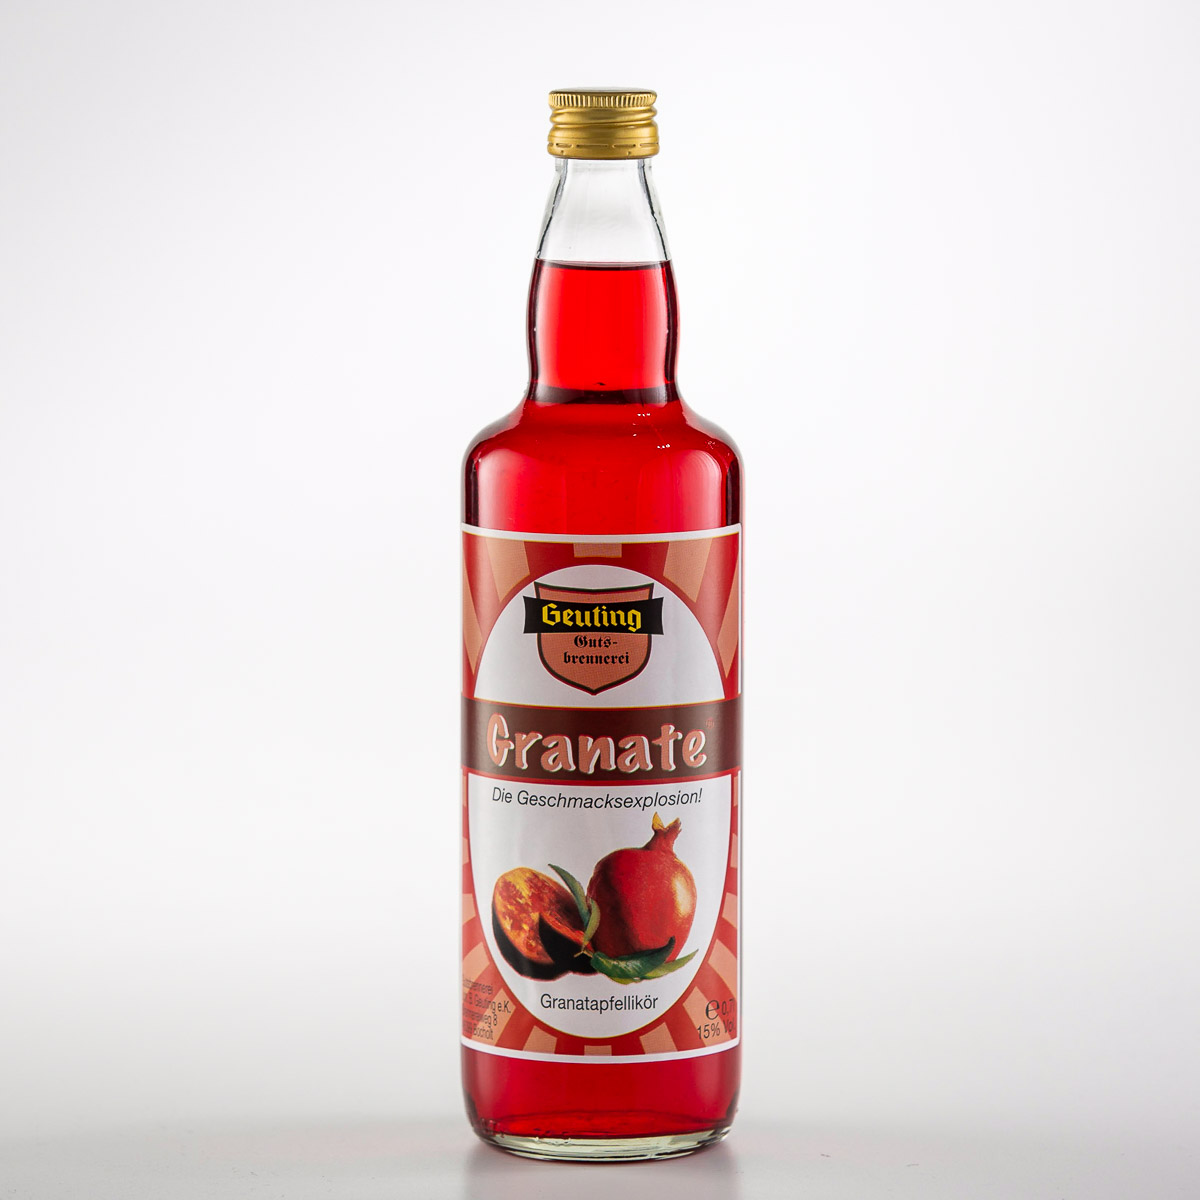 Granate – terrible-alcohol.de